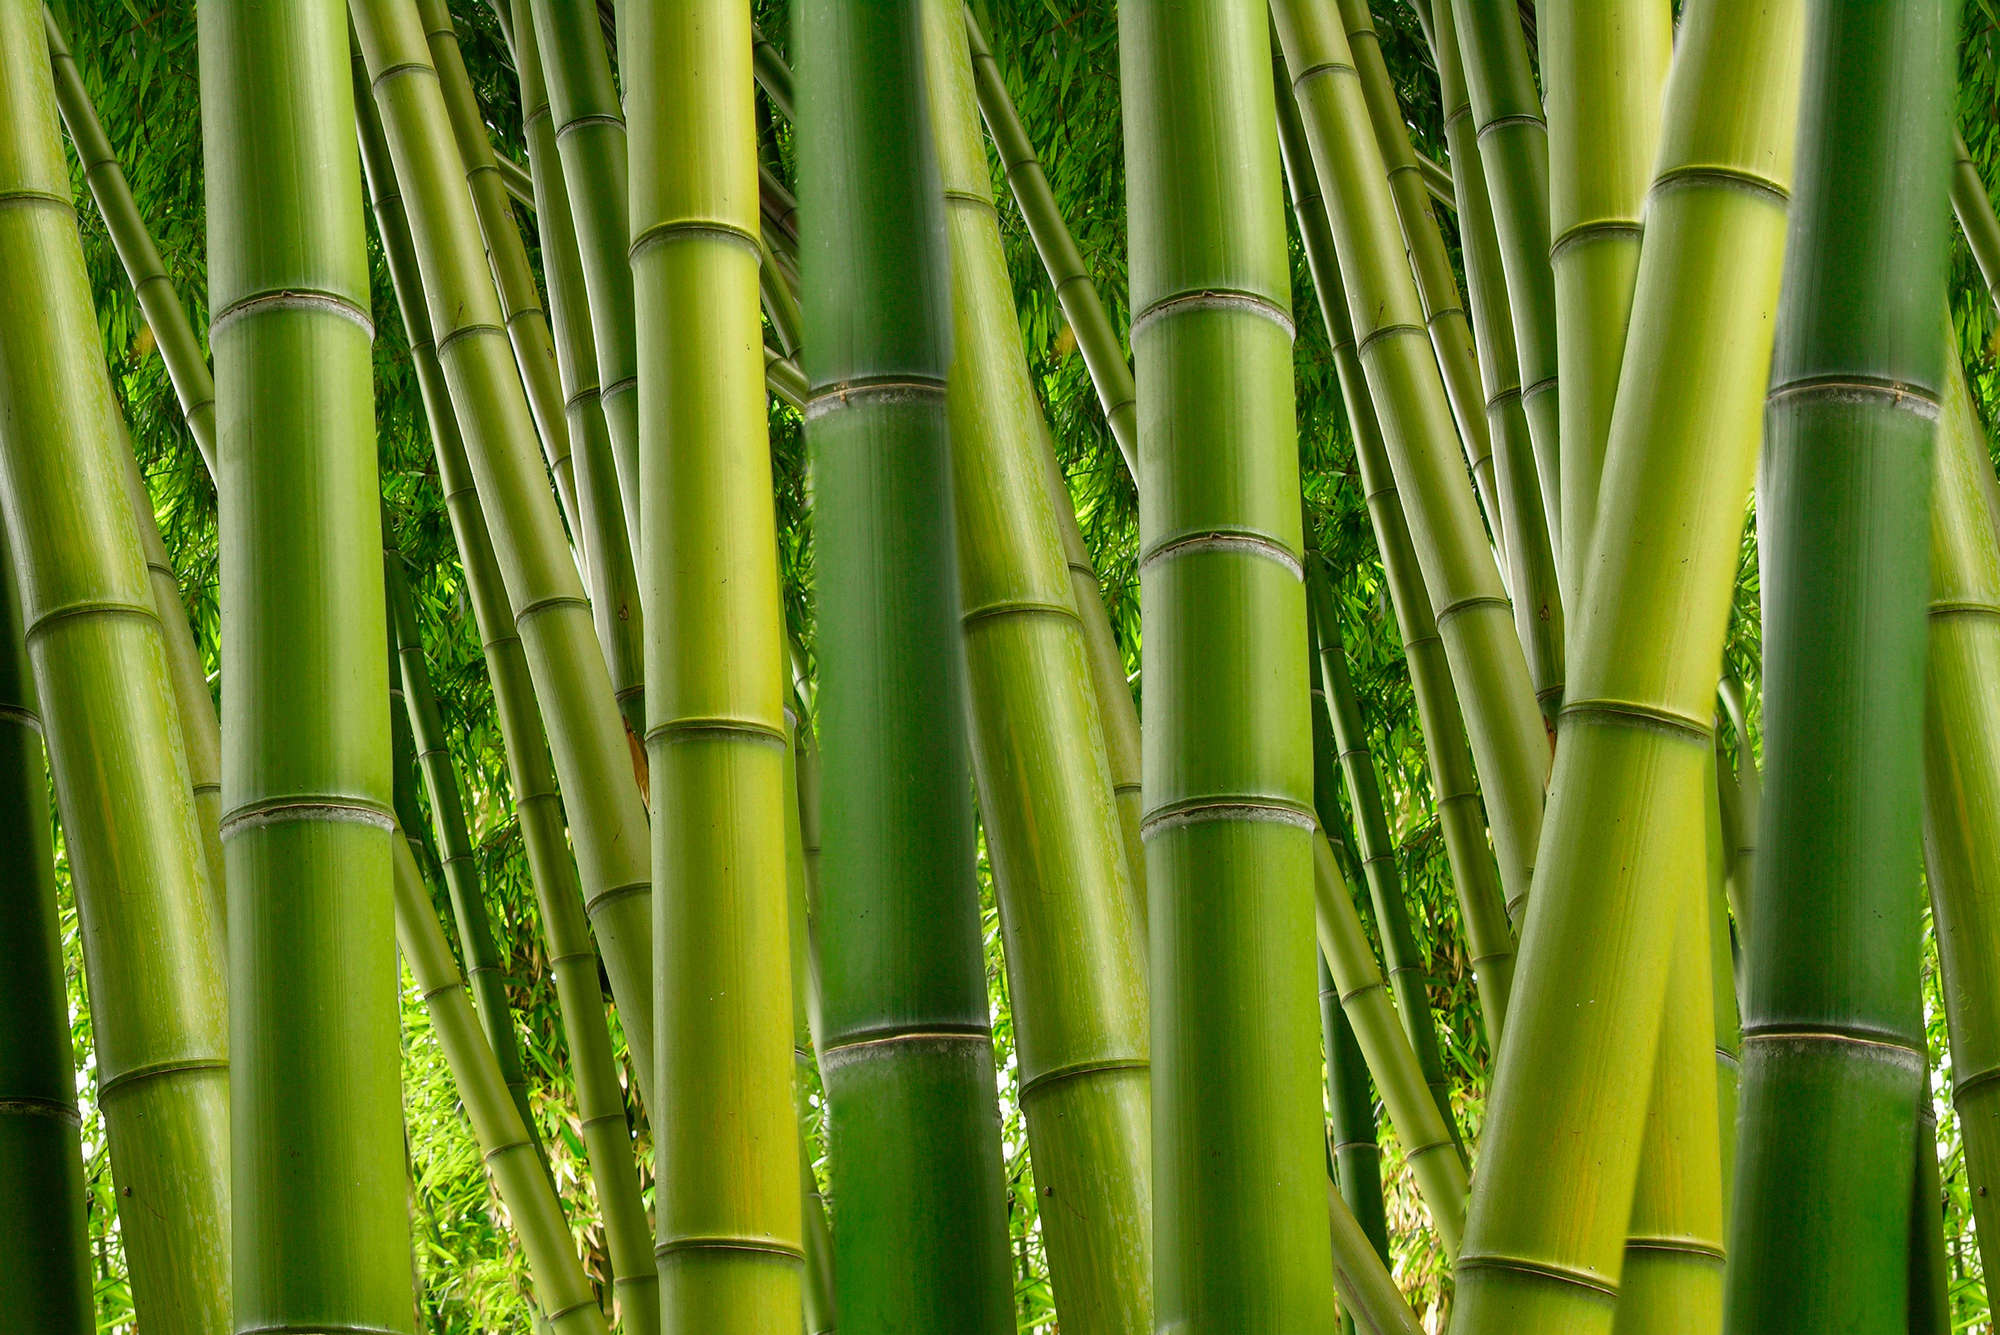             Natuurbehang bamboebos motief op structuurvlieseline
        